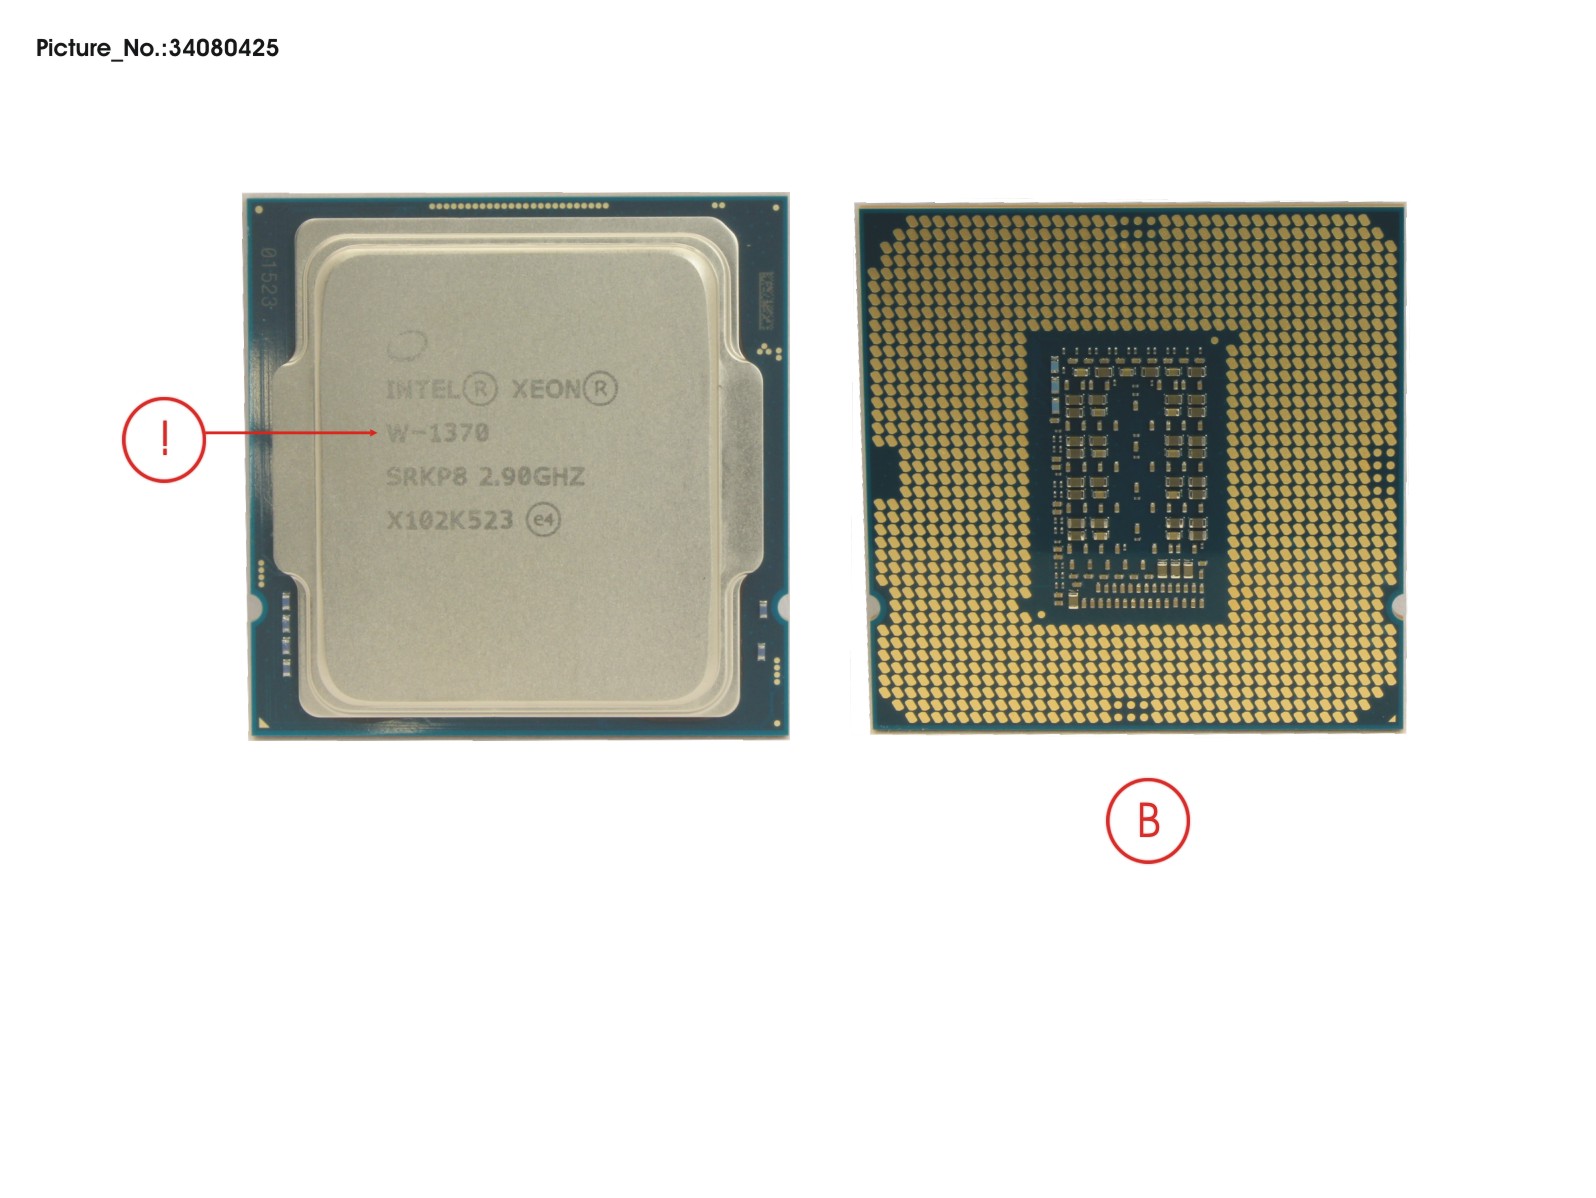 CPU INTEL XEON W-1370 2,9 GHZ 80W